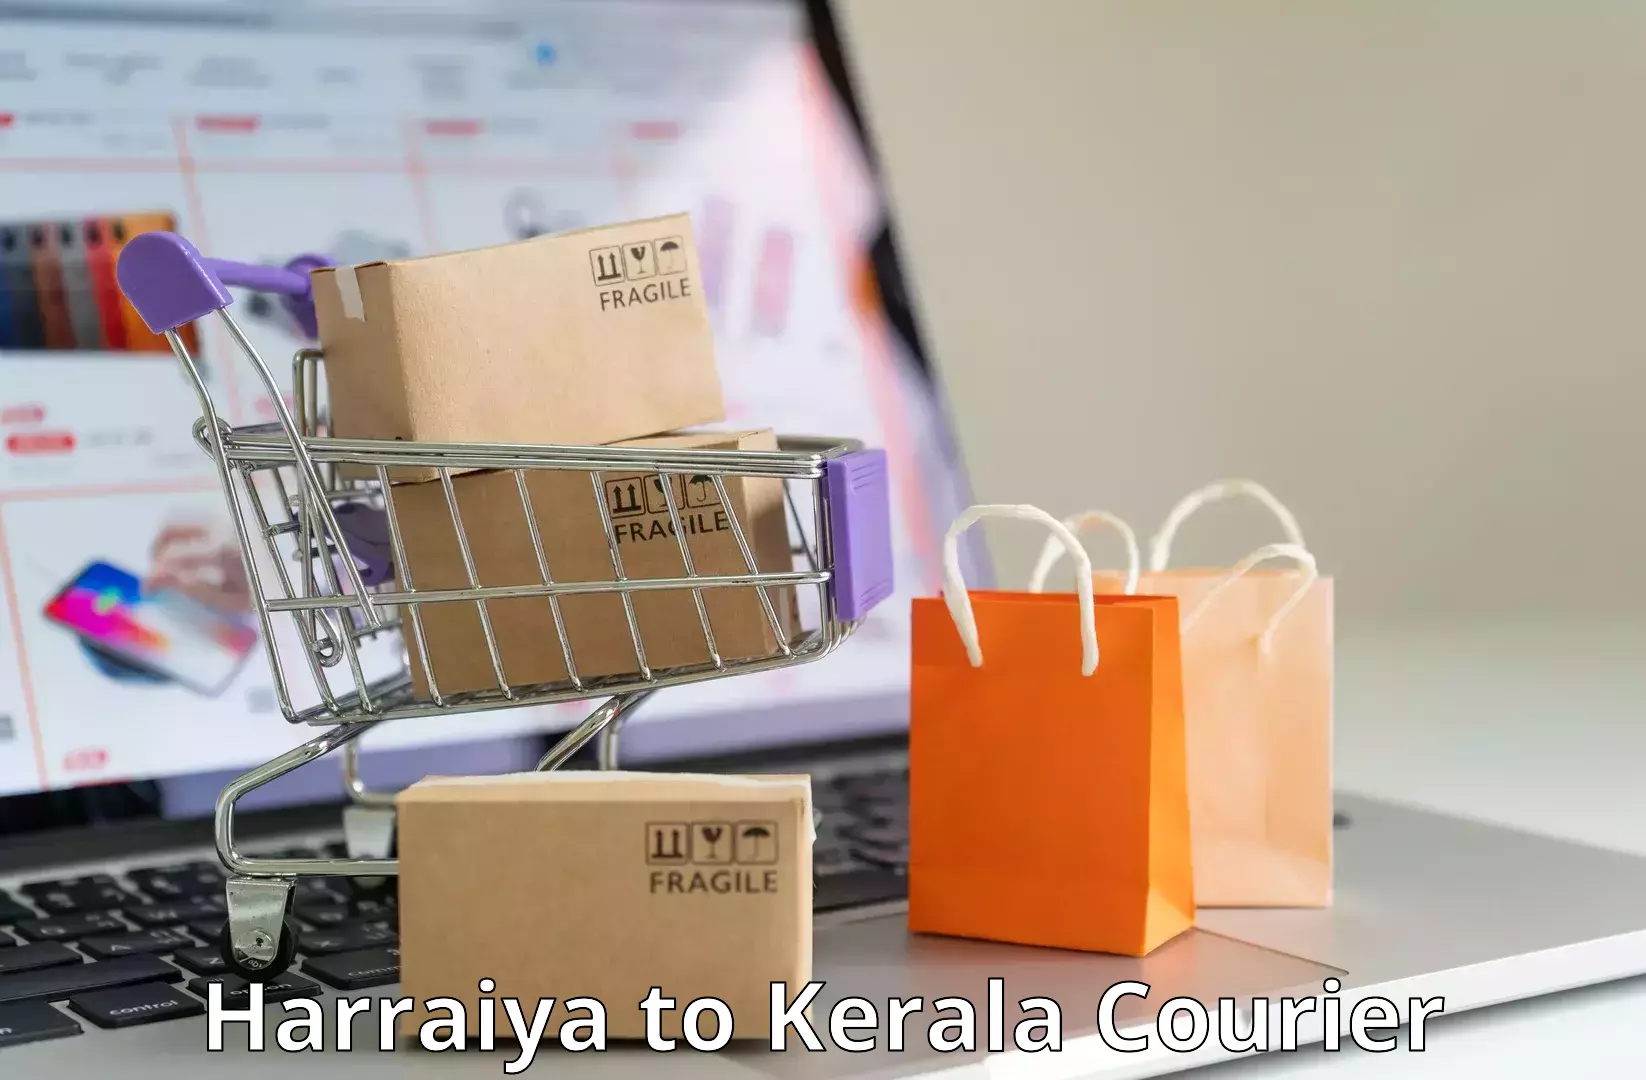 Fast delivery service Harraiya to Kerala